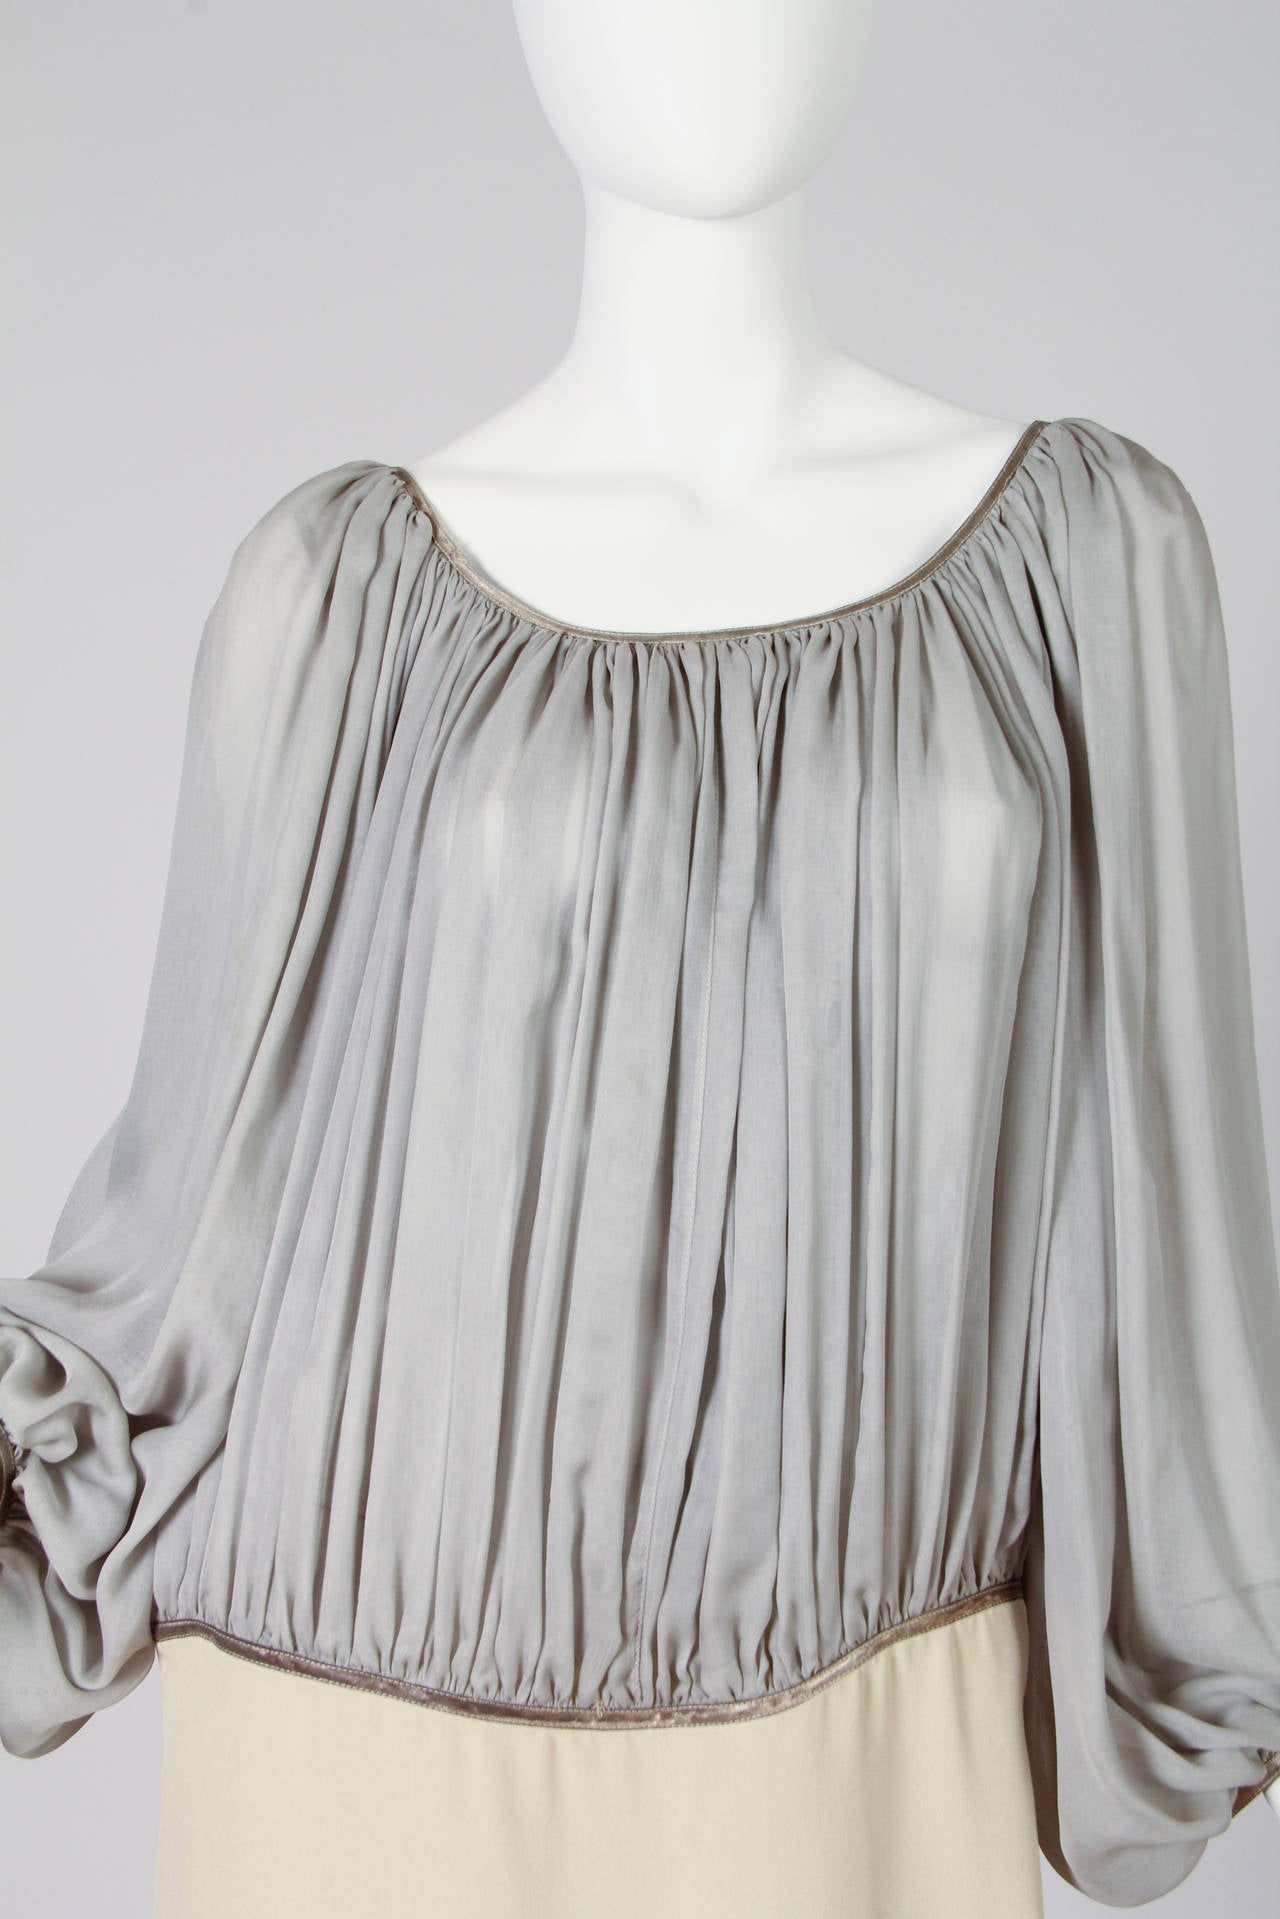 1980S GEOFFREY BEENE Cream & Grey Silk Chiffon Crepe Dress With Metallic Details 1